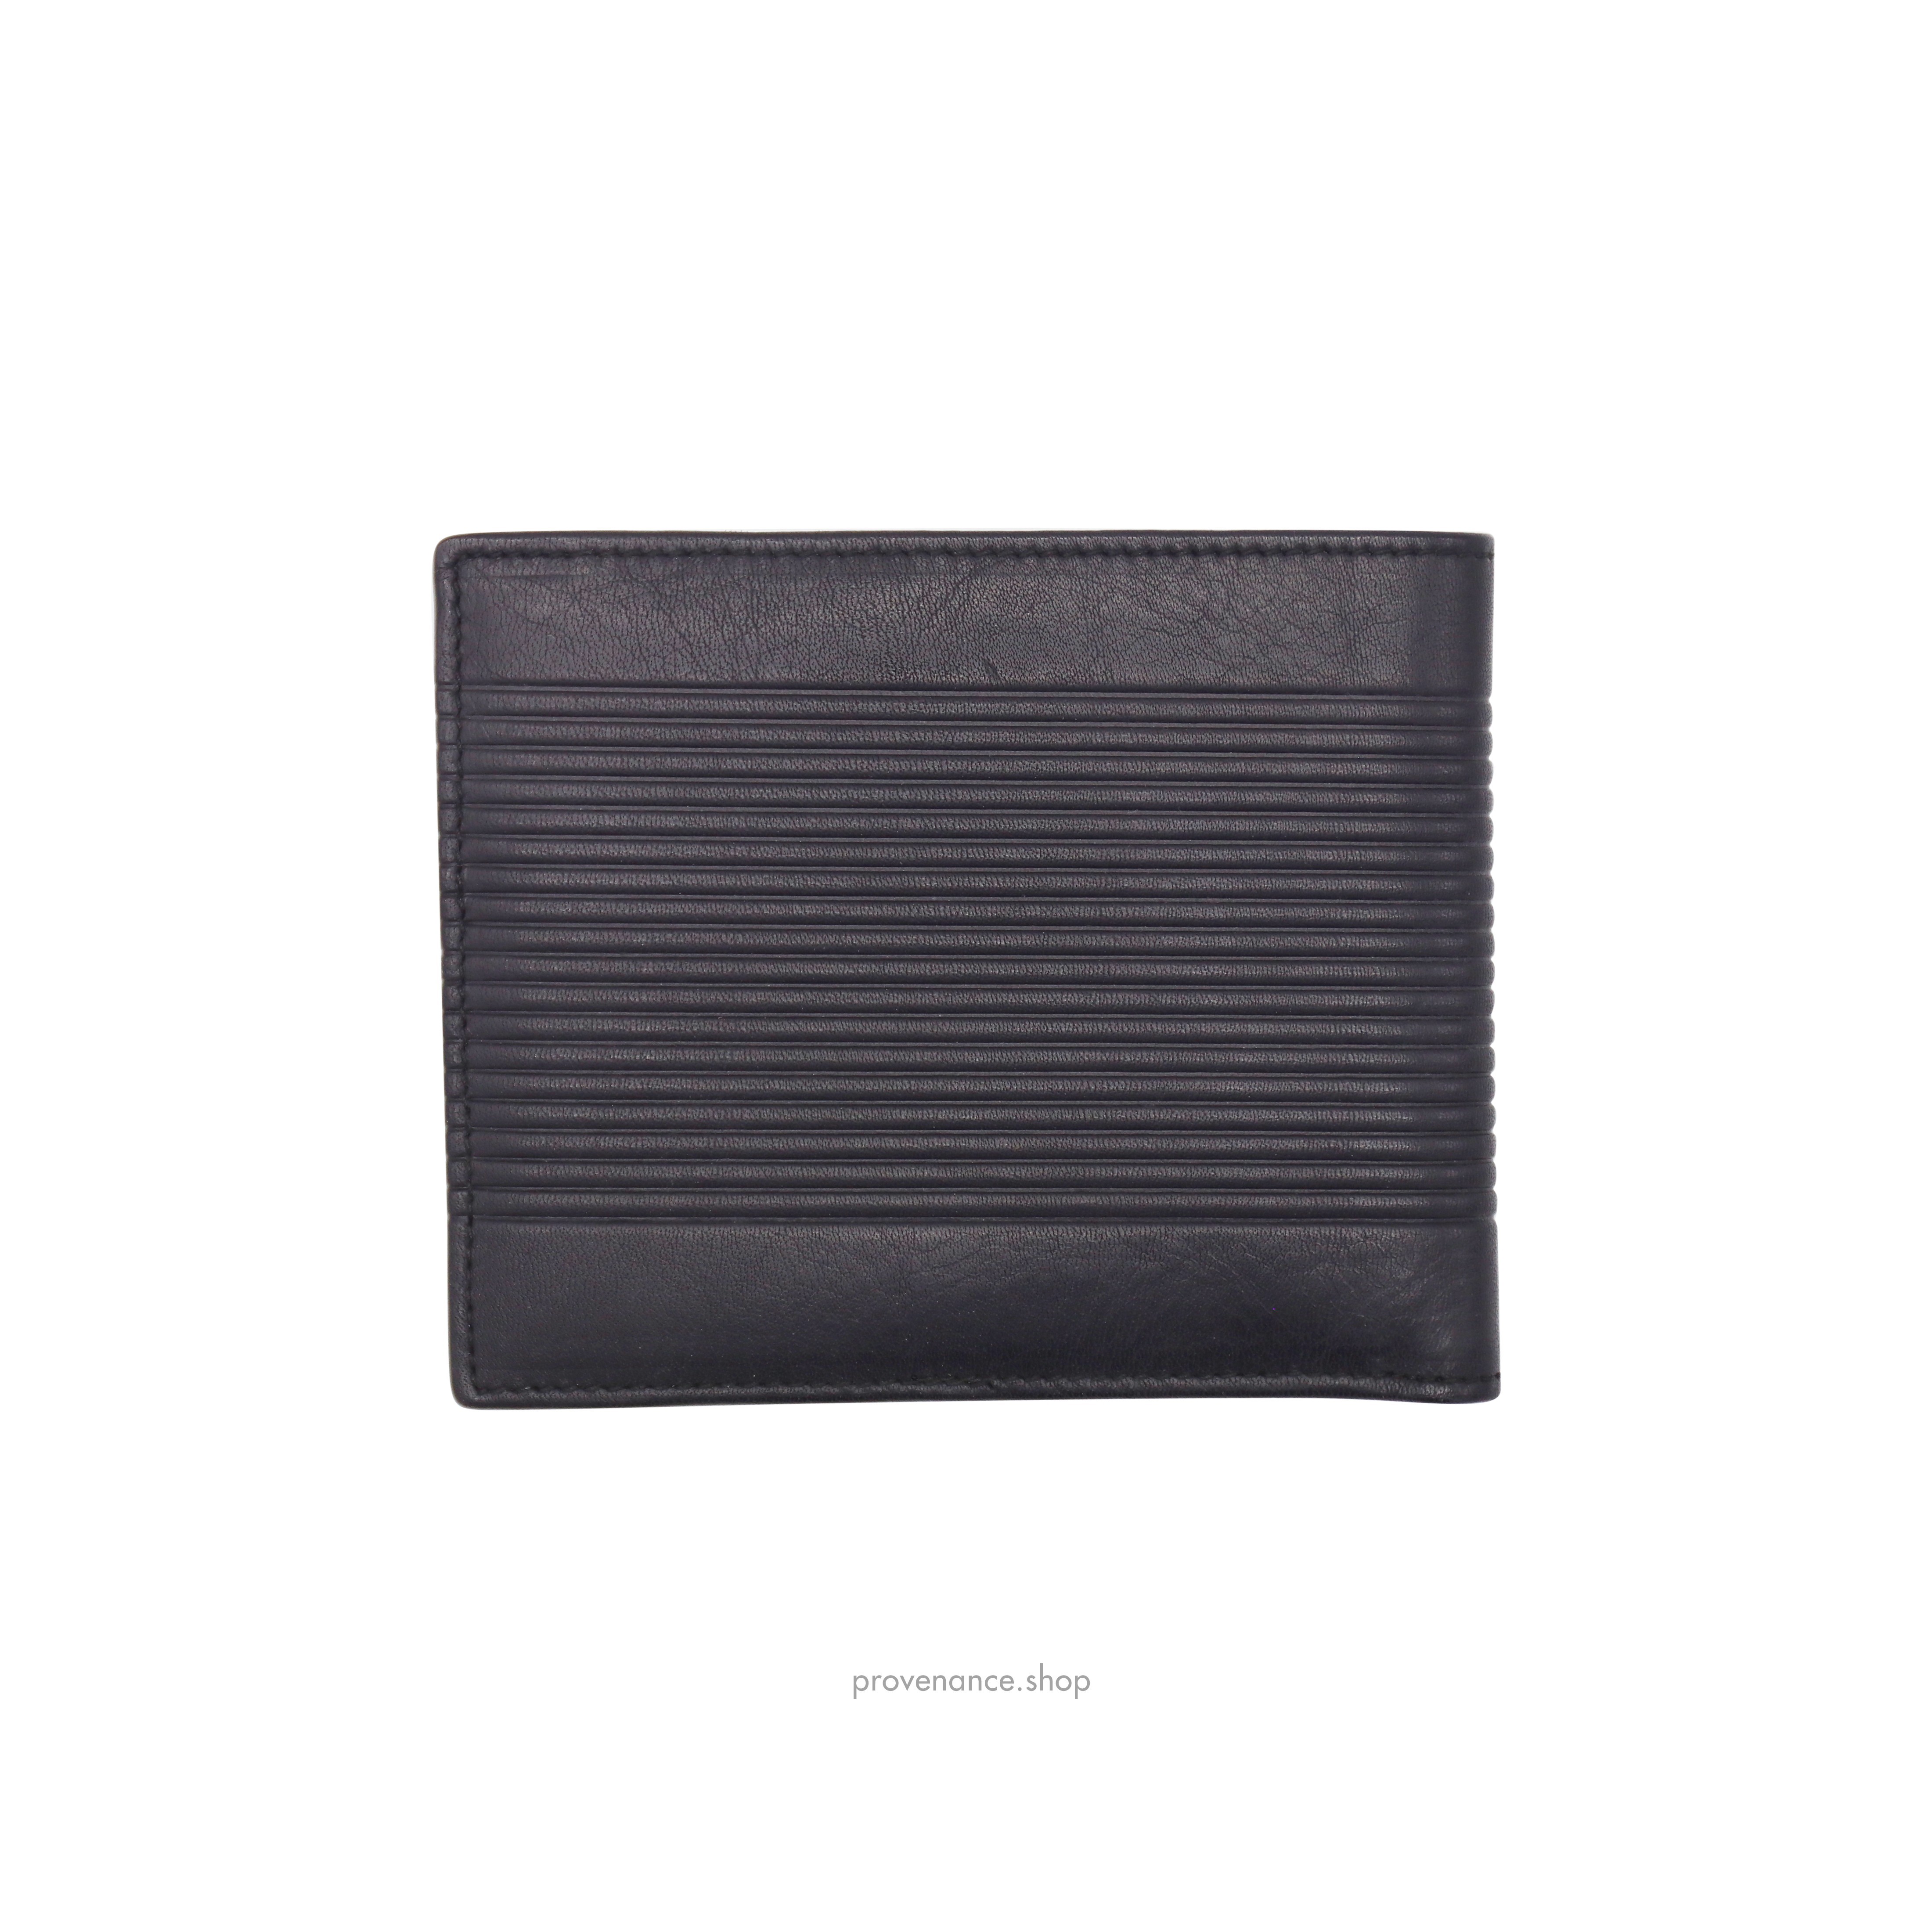 Lanvin Bifold Wallet - Black Leather - 3